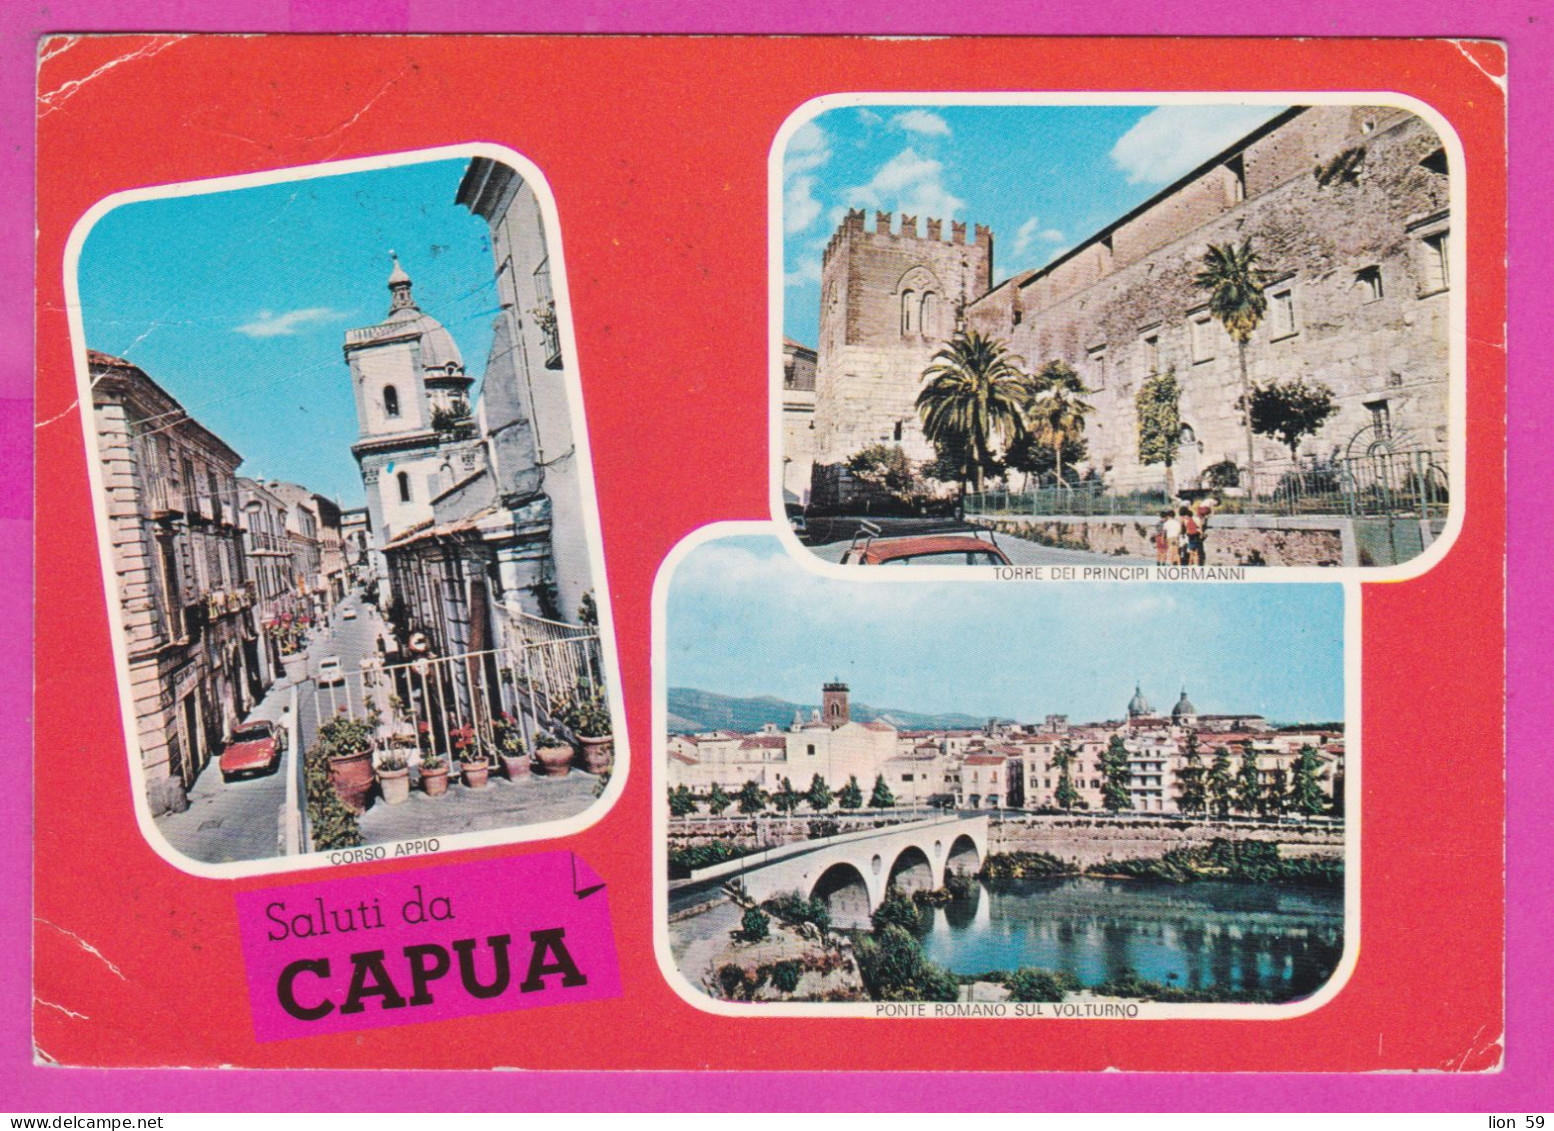 293957 / Italy - Saluti Da CAPUA 3 View Bridge Castle PC 1972 USED  40+50 L Coin Of Syracuse , Italia Italie Italien - 1971-80: Marcofilie